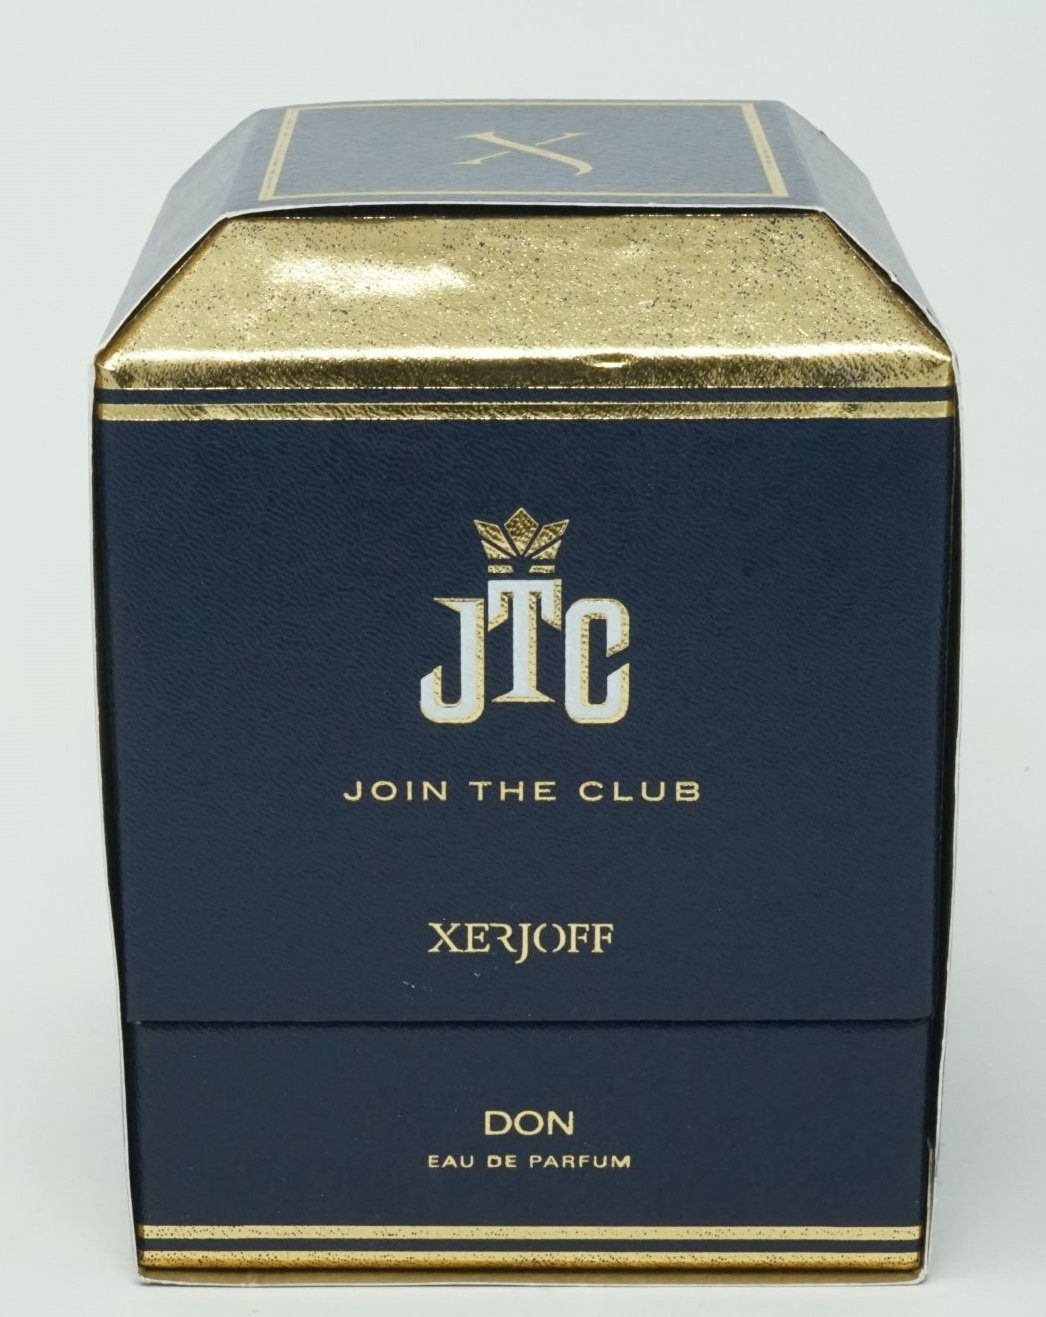 XERJOFF Eau de Parfum XerJoff Club 50 ml Eau Joun Don Parfum de The